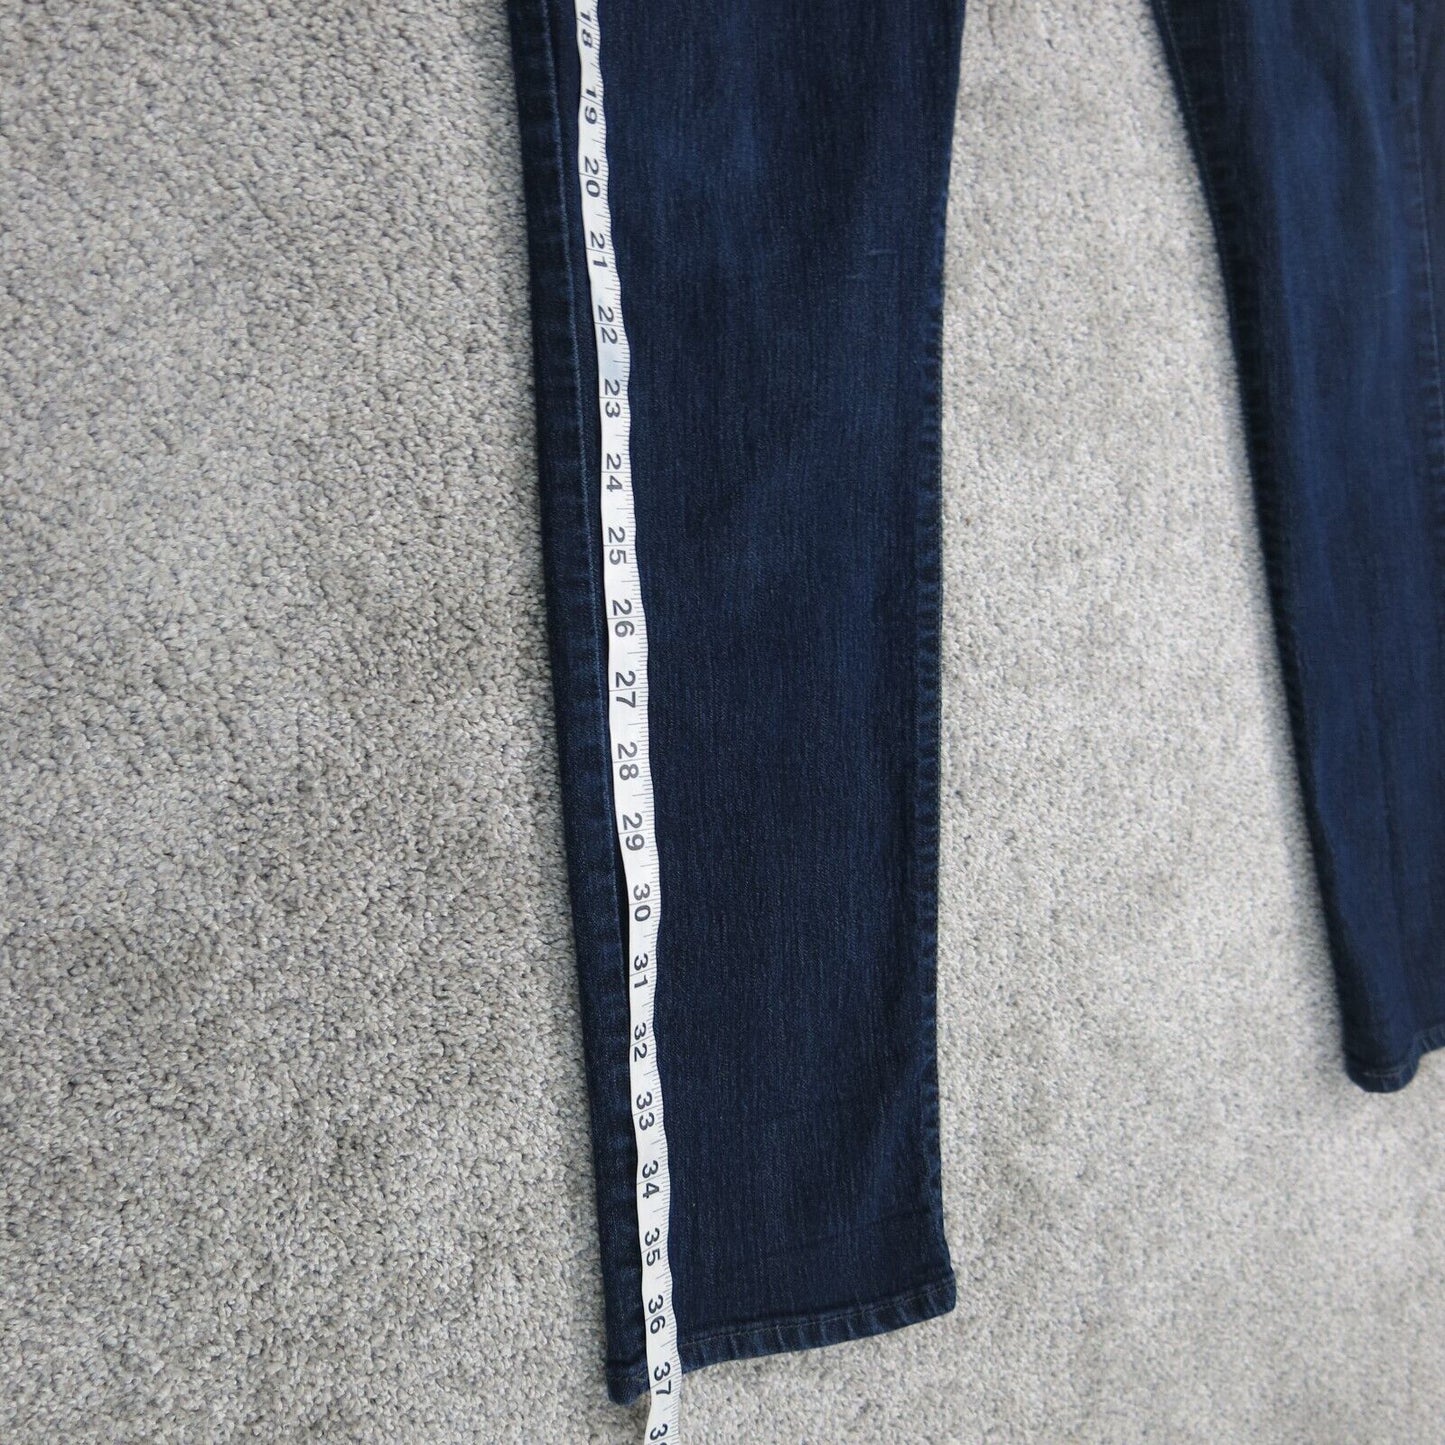 Denizen From Levi's Women Skinny Jeans Stretch Mid Rise Pockets Blue Size 16